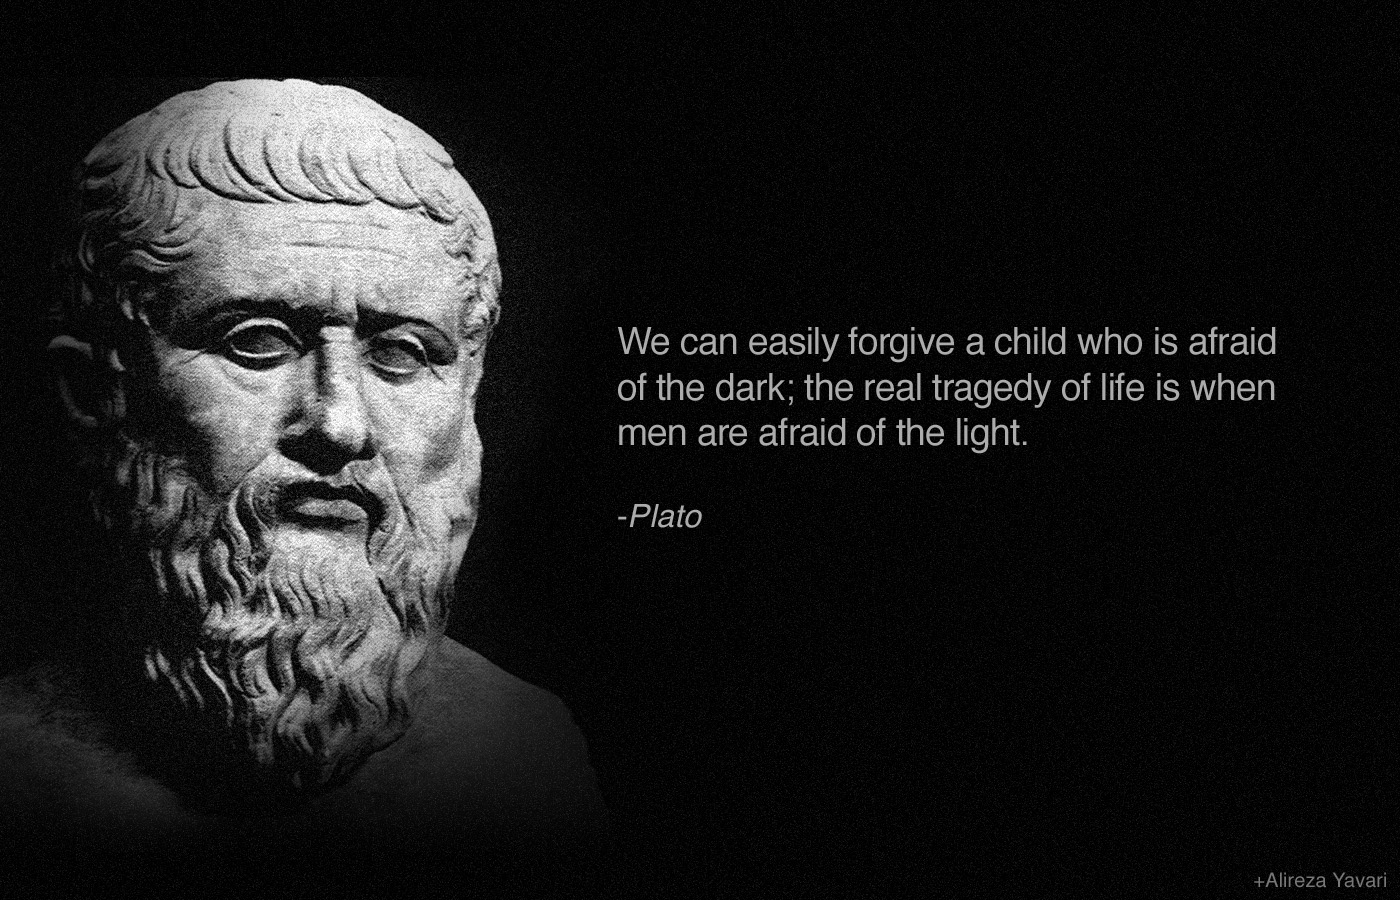 famous philosophers quotes about education